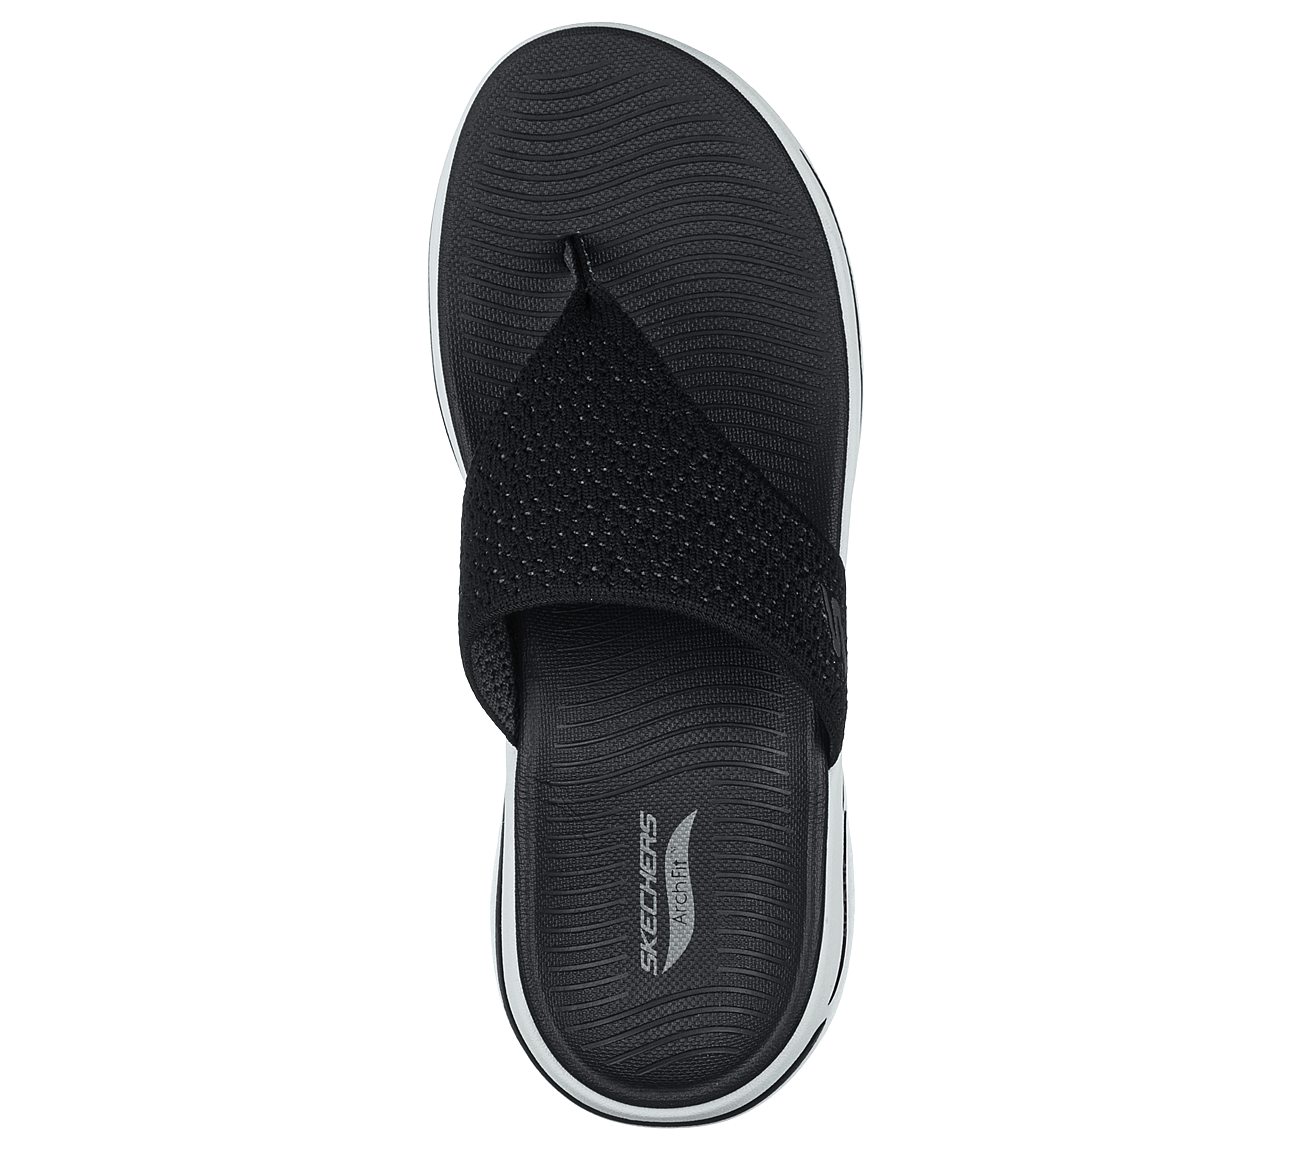 GO WALK ARCH FIT SANDAL - WEE, BLACK/WHITE Footwear Top View